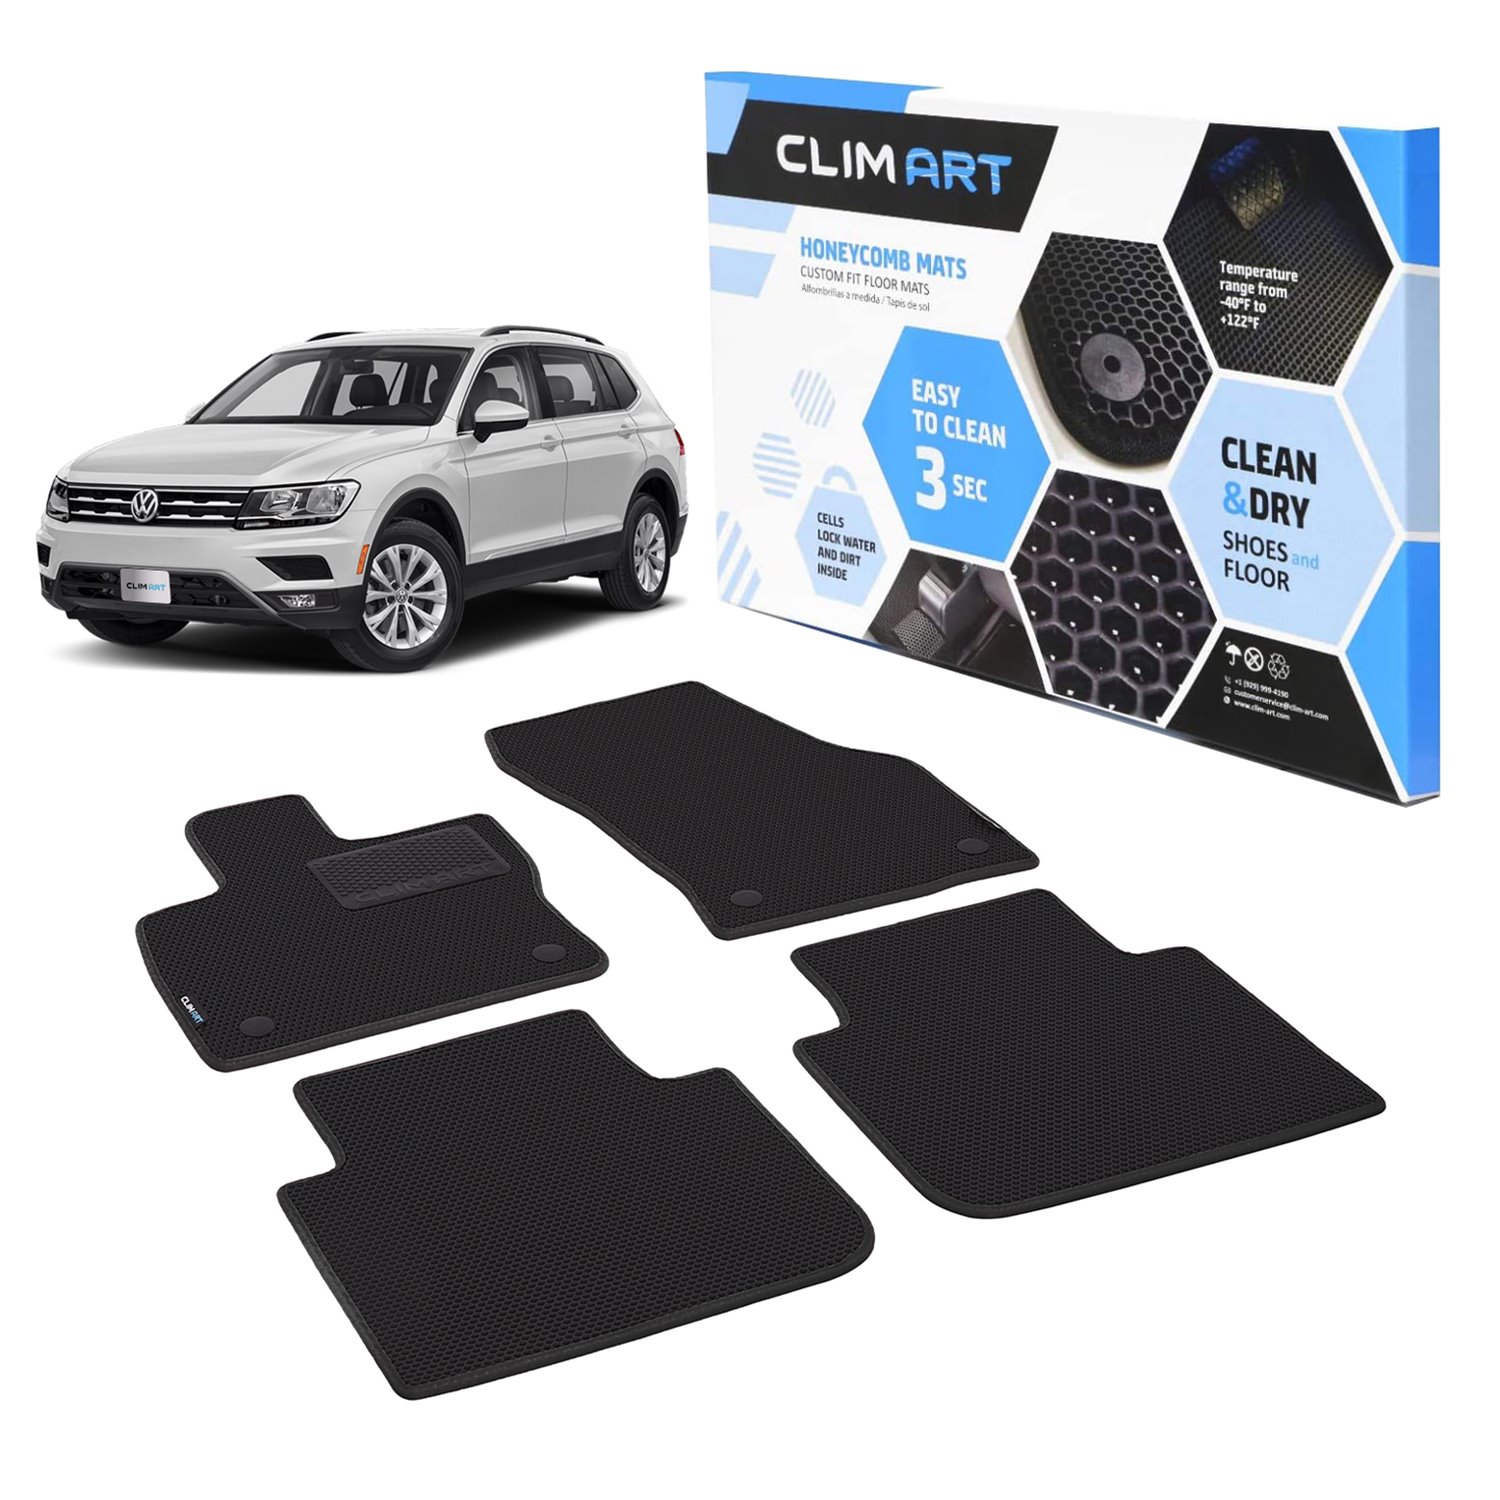 CLIM ART Honeycomb Custom Fit Floor Mats for 2018-2021 Volkswagen Tiguan